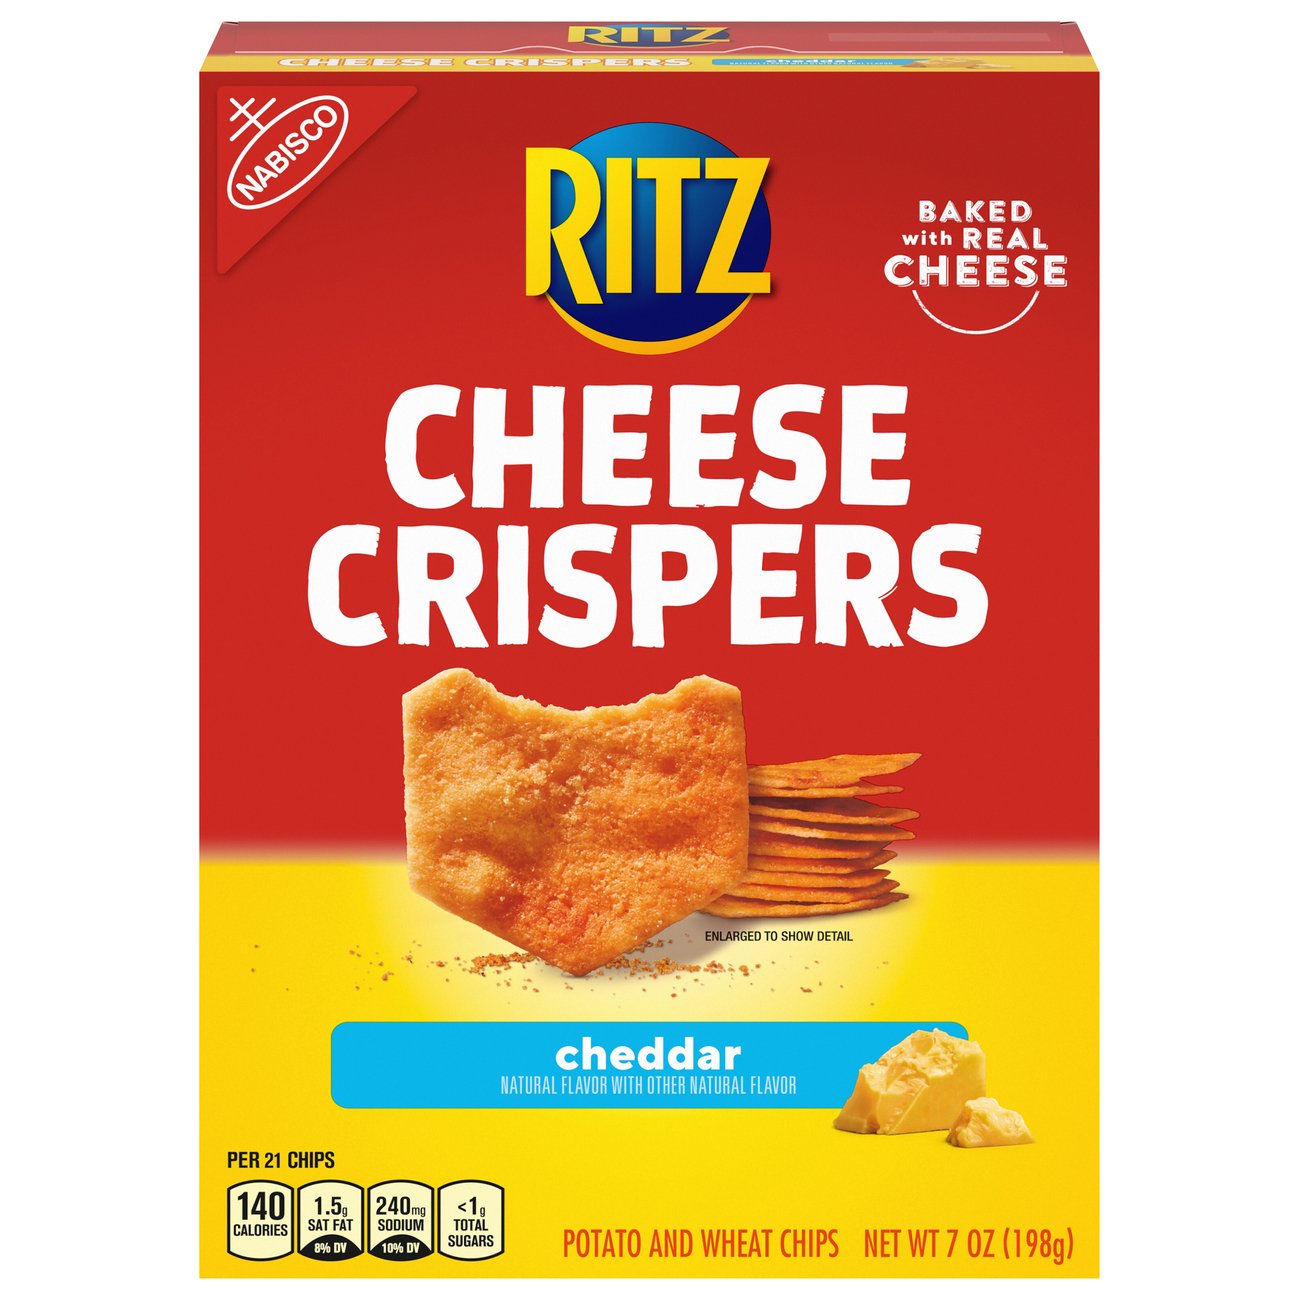 Ritz Cheese Crispers Cheddar - Shop Crackers & Breadsticks at H-E-B